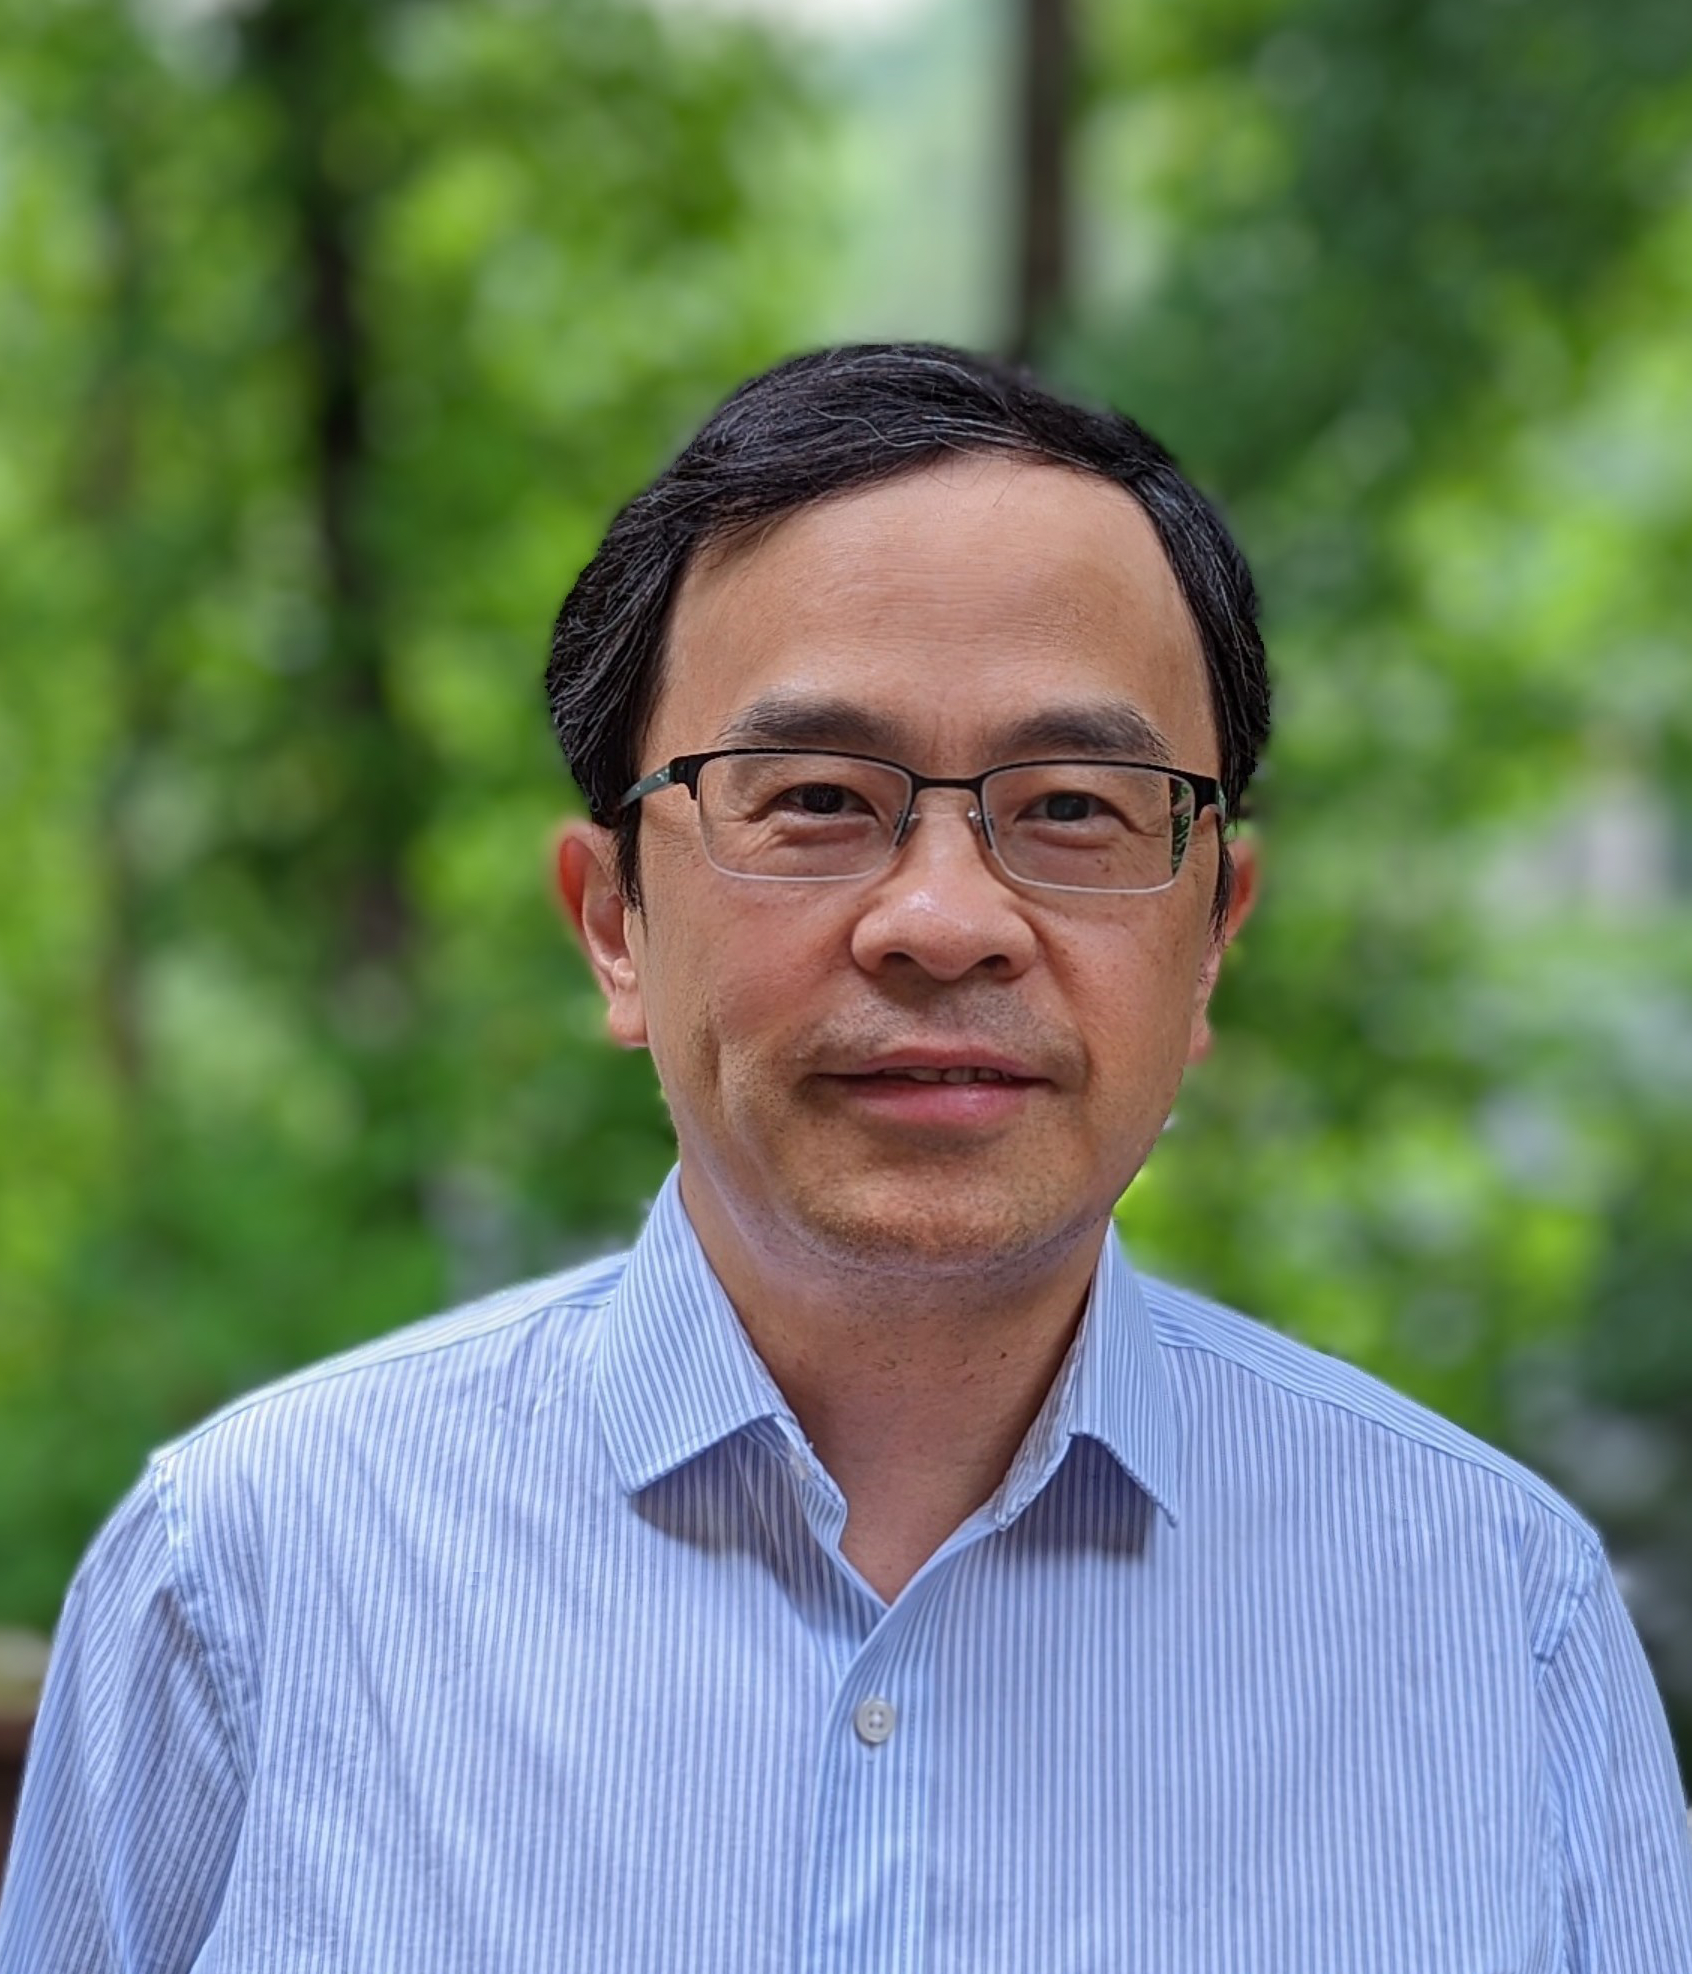 Ting Zhu, Woodruff Professor in the George W. Woodruff School of Mechanical Engineering, Georgia Institute of Technology